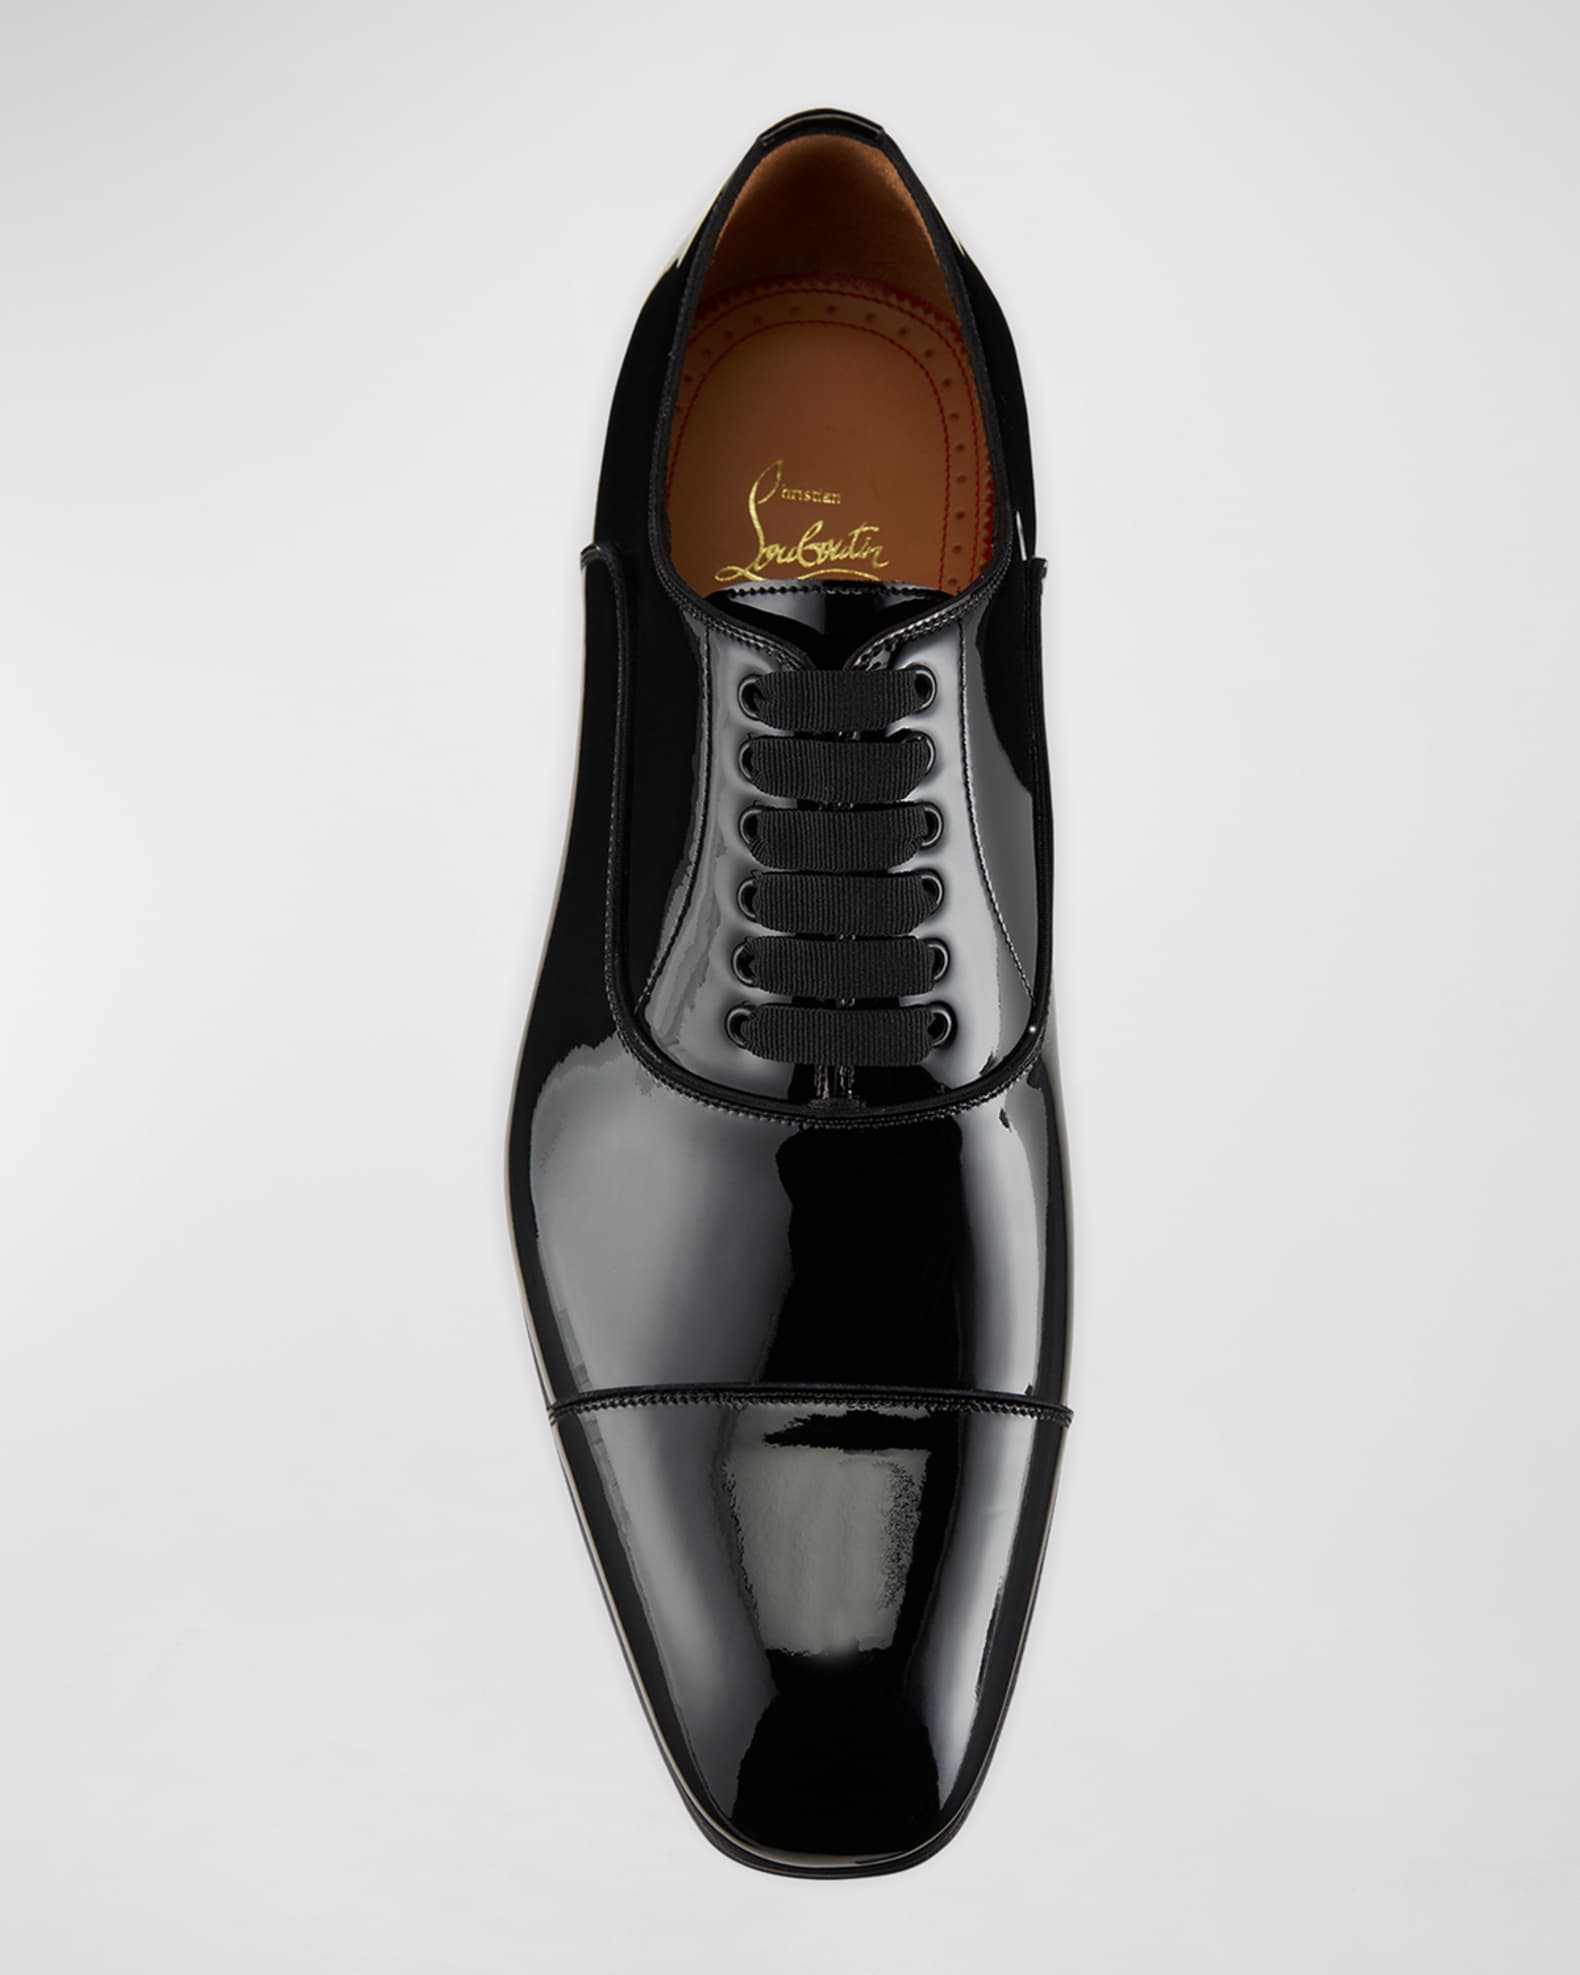 Christian Louboutin Greggo Orlato Flats Calf/Jean Men Shoes NIB